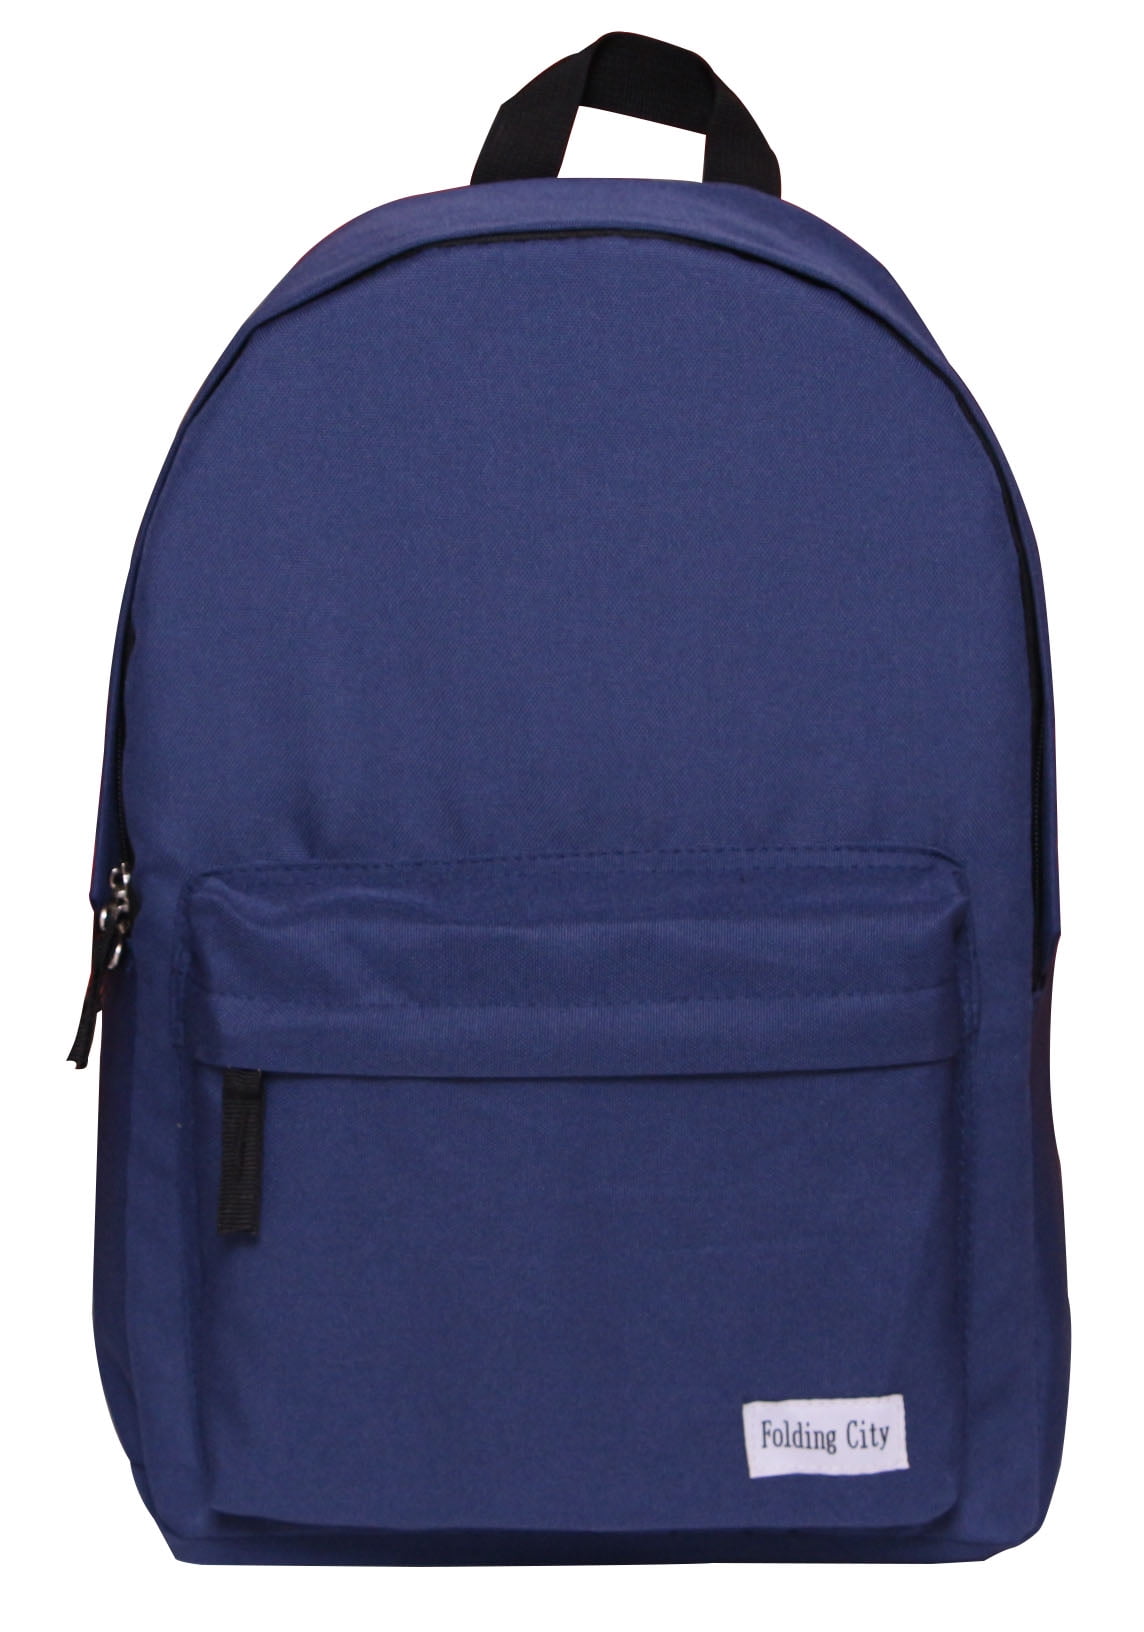 Backpack For Men Teenagers Lightweight Roomy School Bag Deep Blue - 0